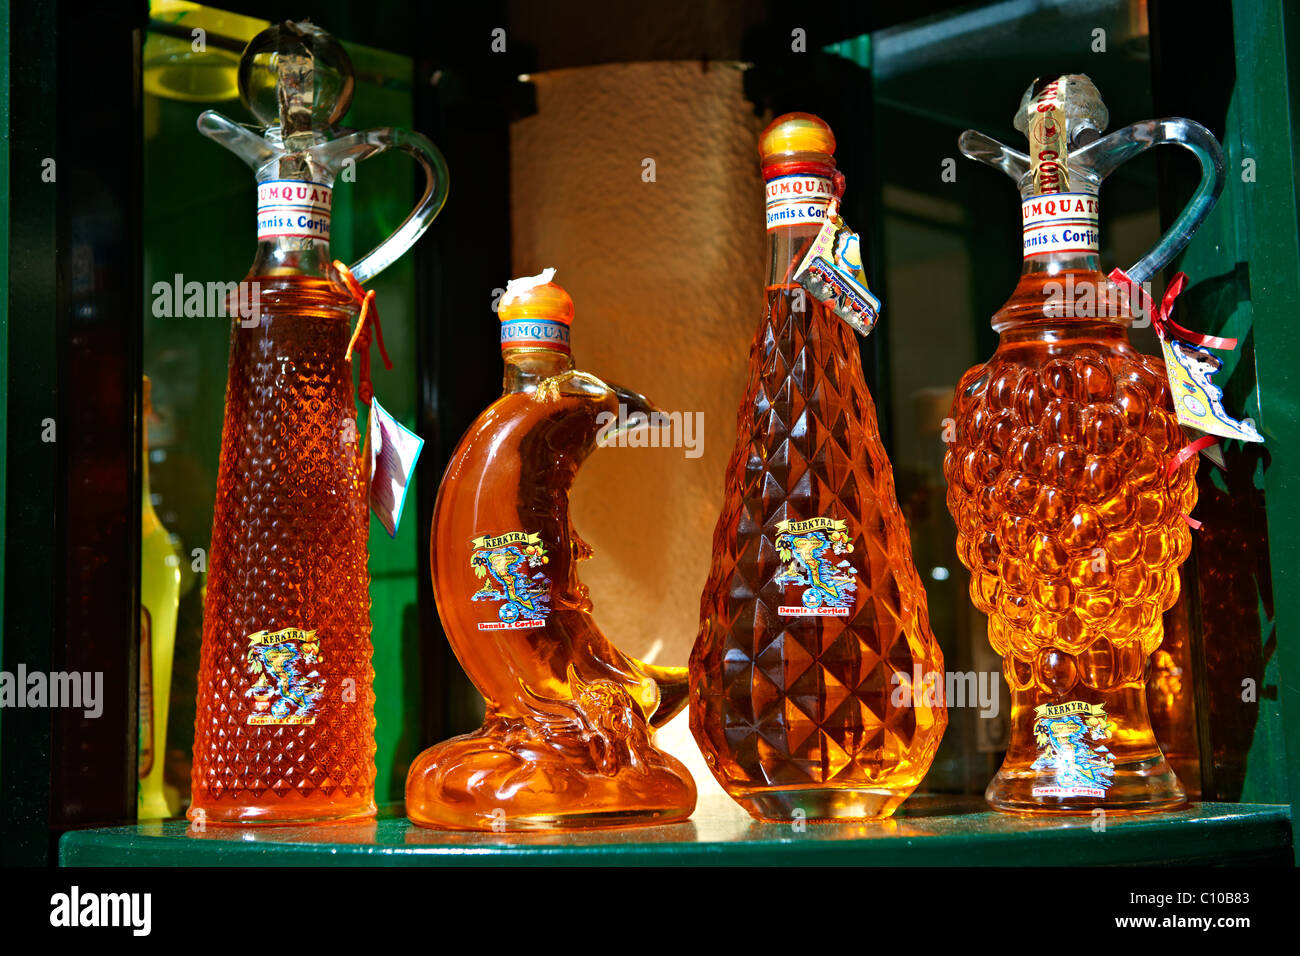 Corfu traditional kumquat liquor bottles Stock Photo